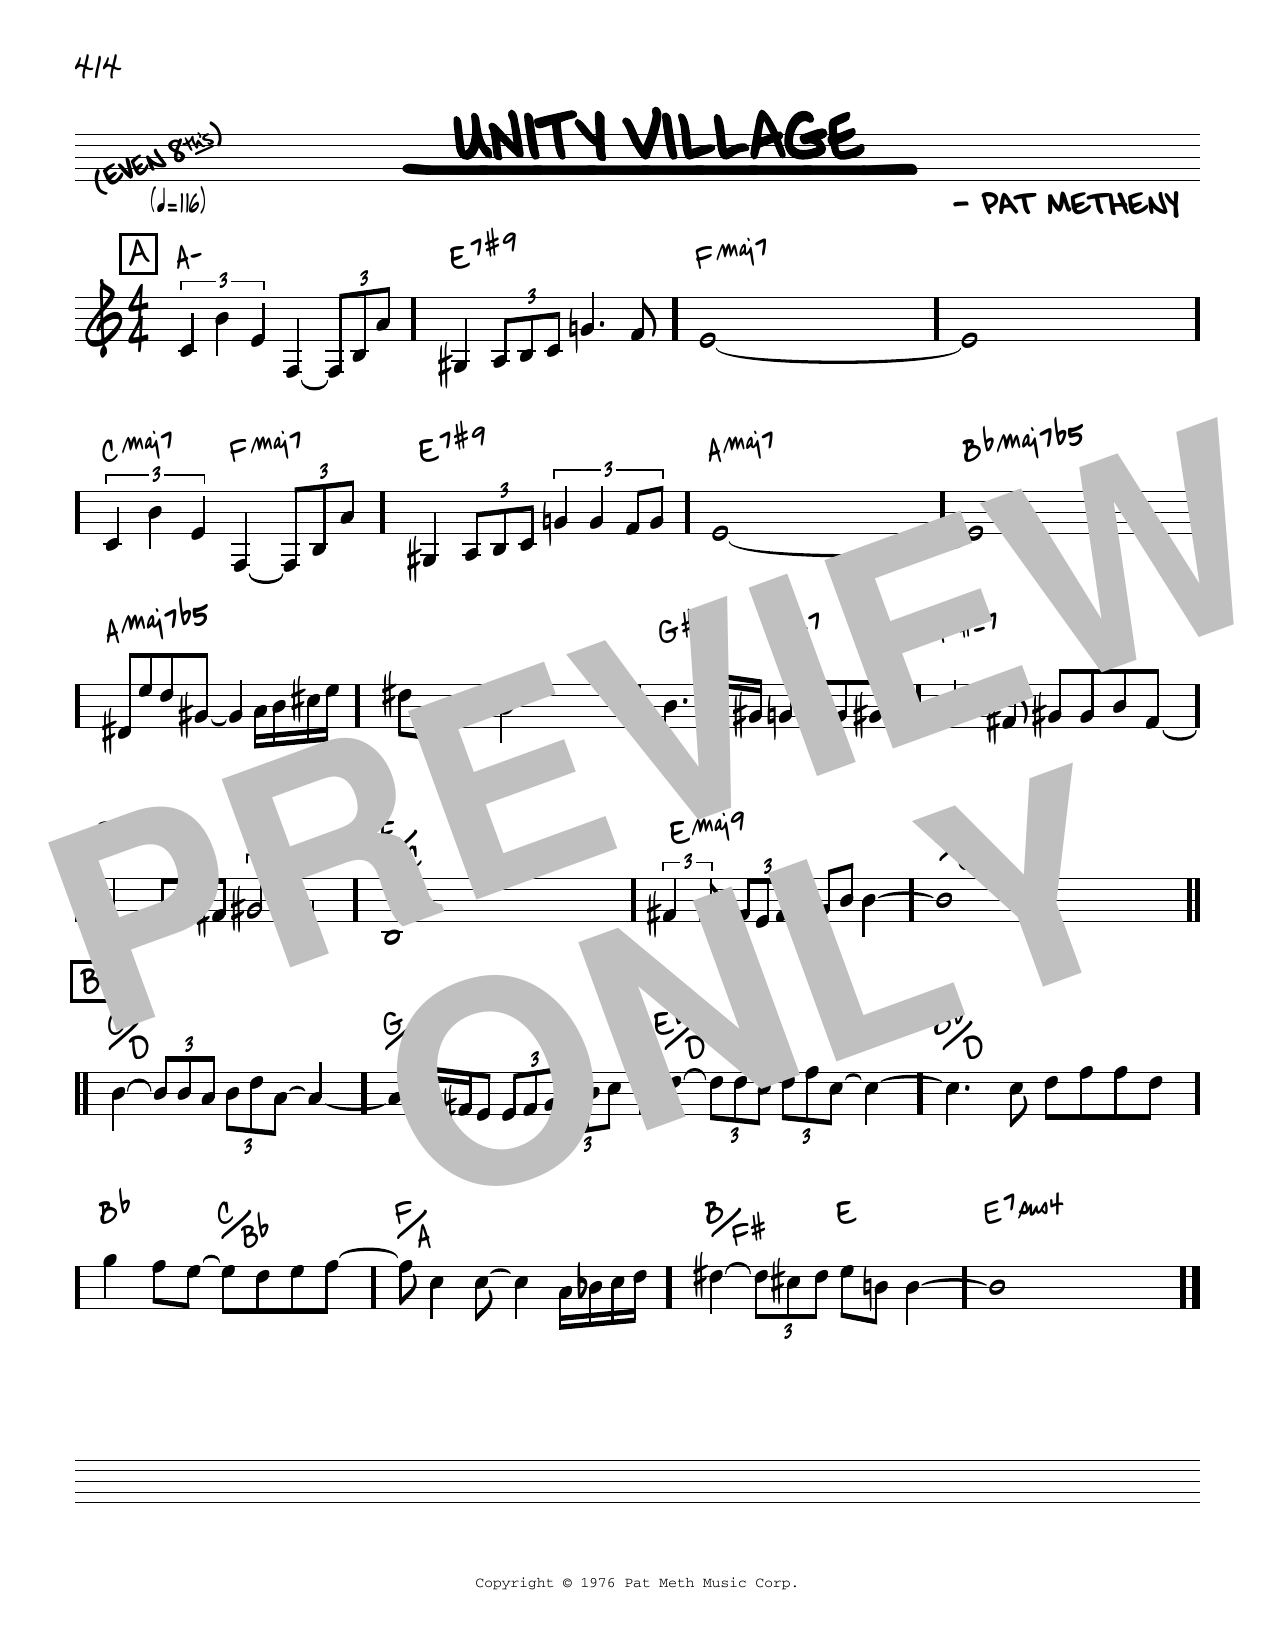 Download Pat Metheny Unity Village [Reharmonized version] (a Sheet Music